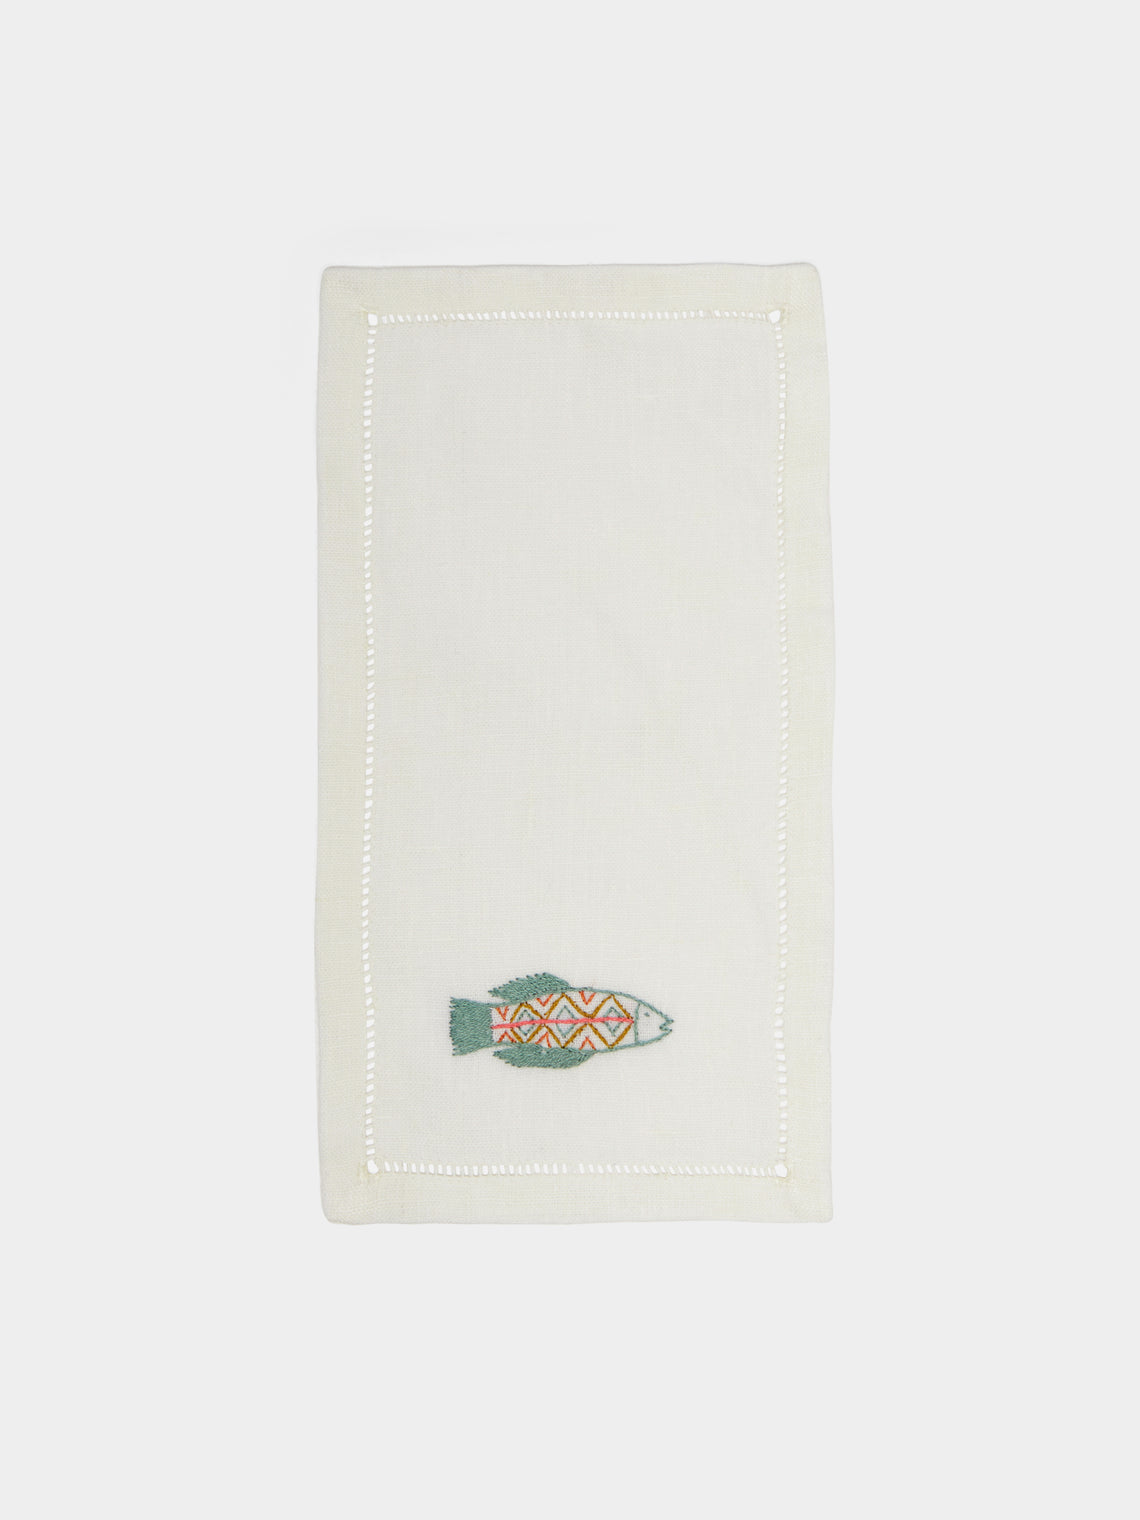 Malaika - Tilipa Hand-Embroidered Linen Cocktail Napkins (Set of 6) - White - ABASK - 